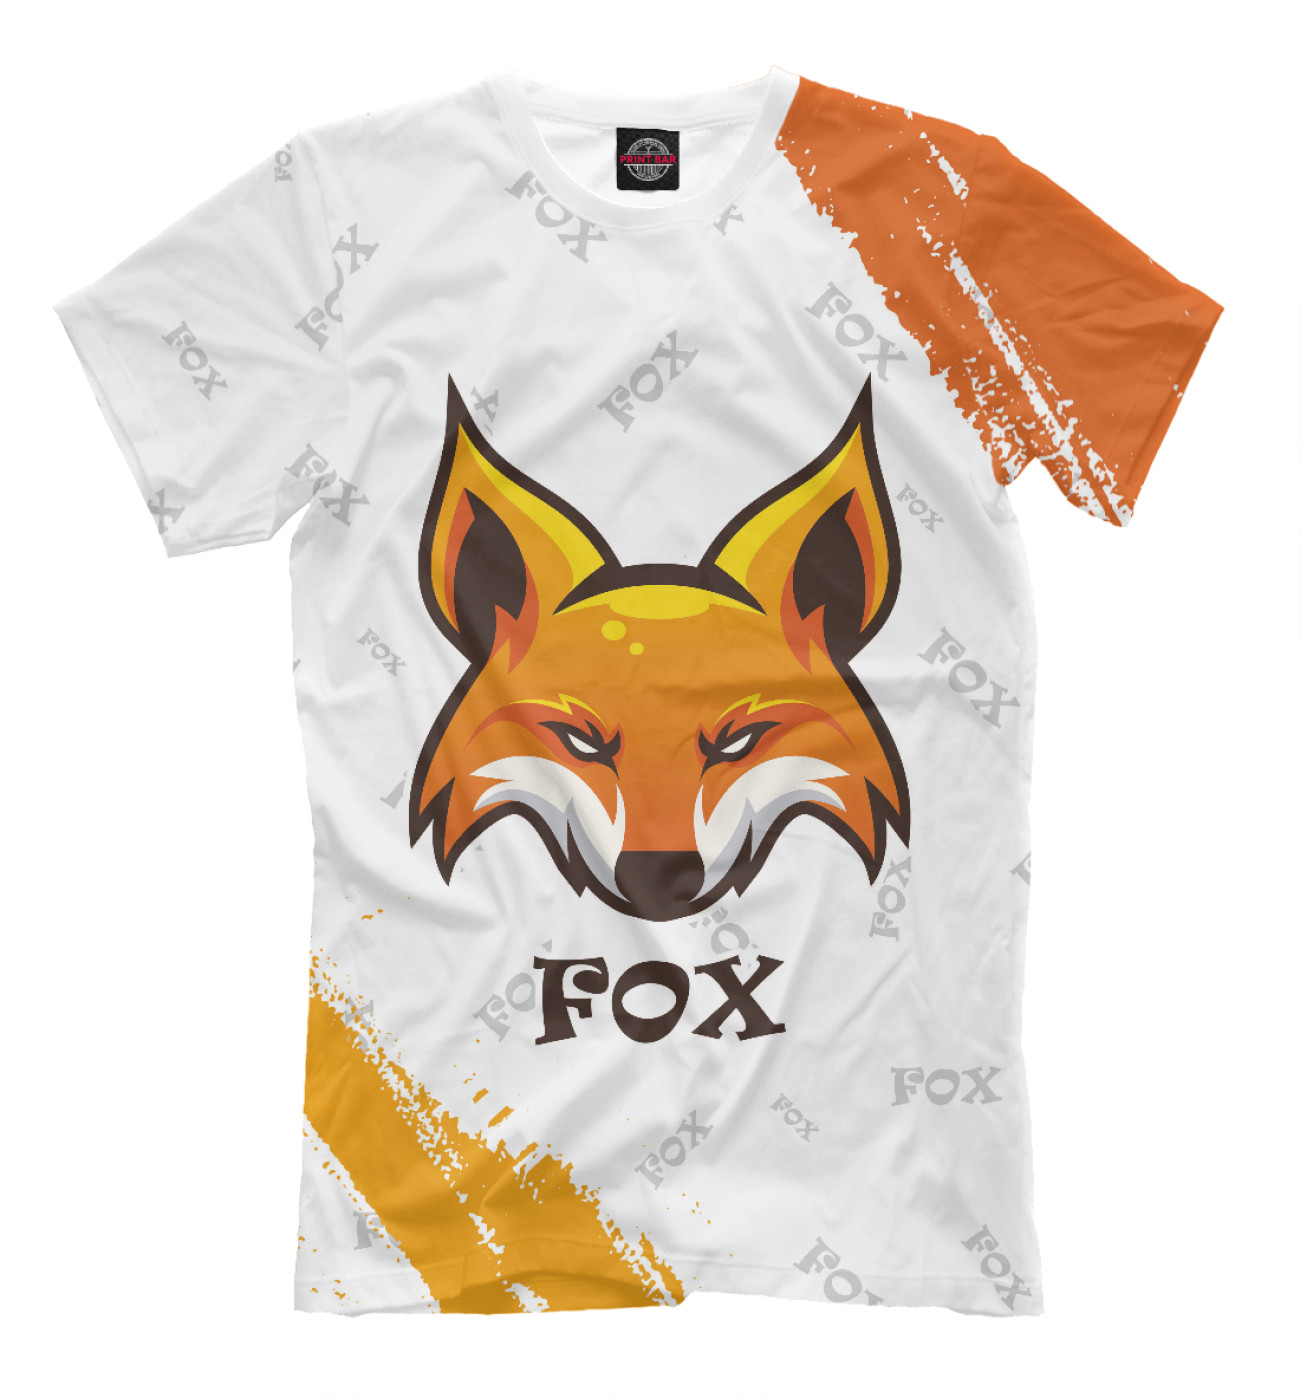 Мужская Футболка Fox, артикул: FOX-441150-fut-2